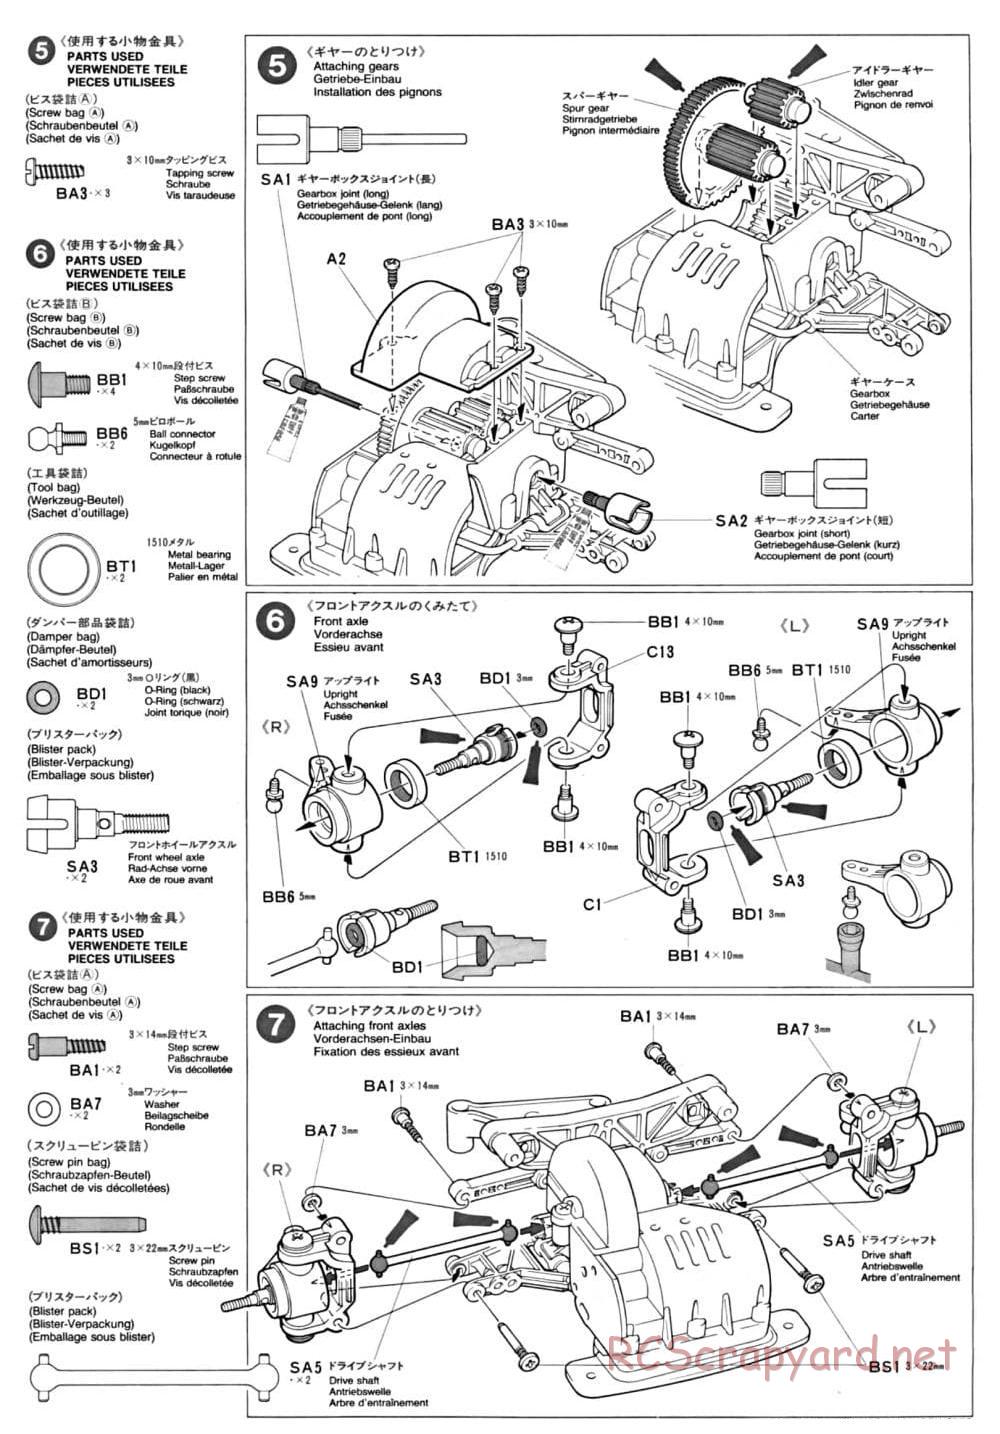 Tamiya - FF-01 Chassis - Manual - Page 6